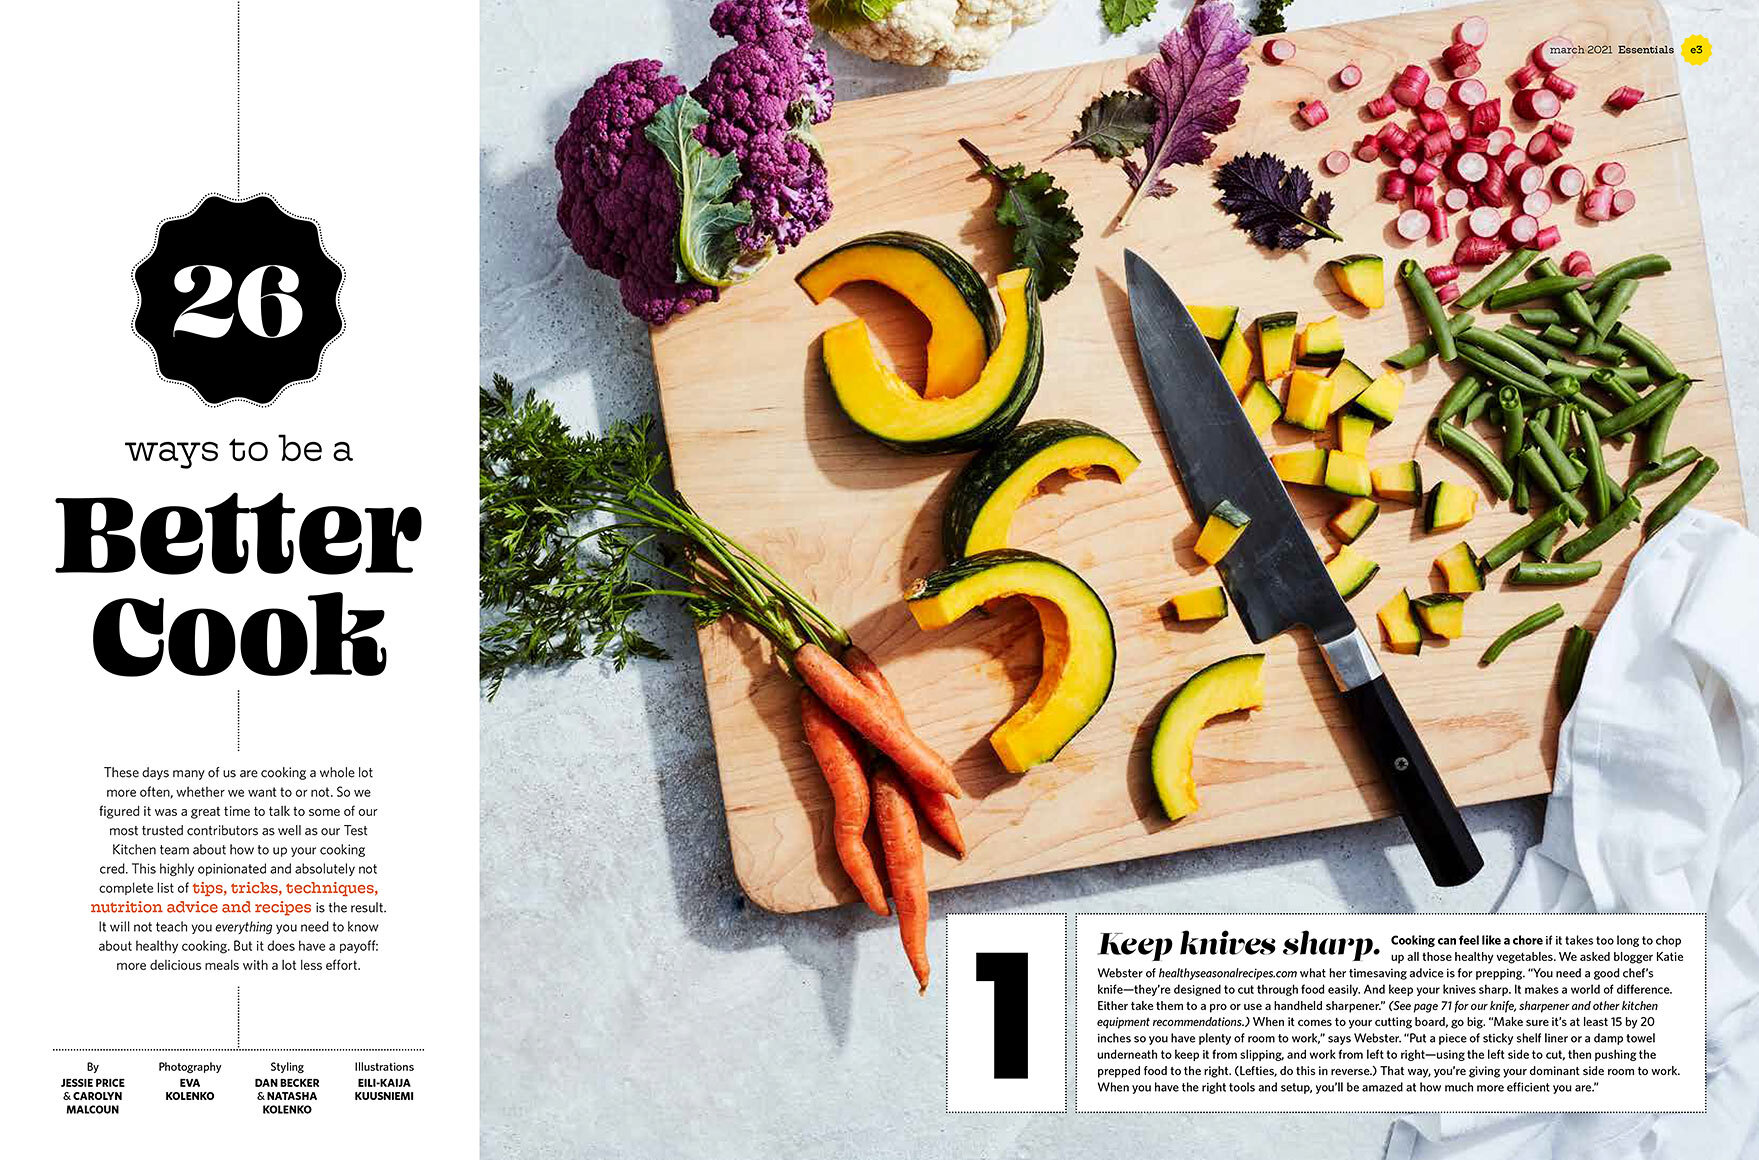 Eva-kolenko-best-top-food-photographer-produce-veggies-eating-well-recipes-heathy-vibrant.jpg